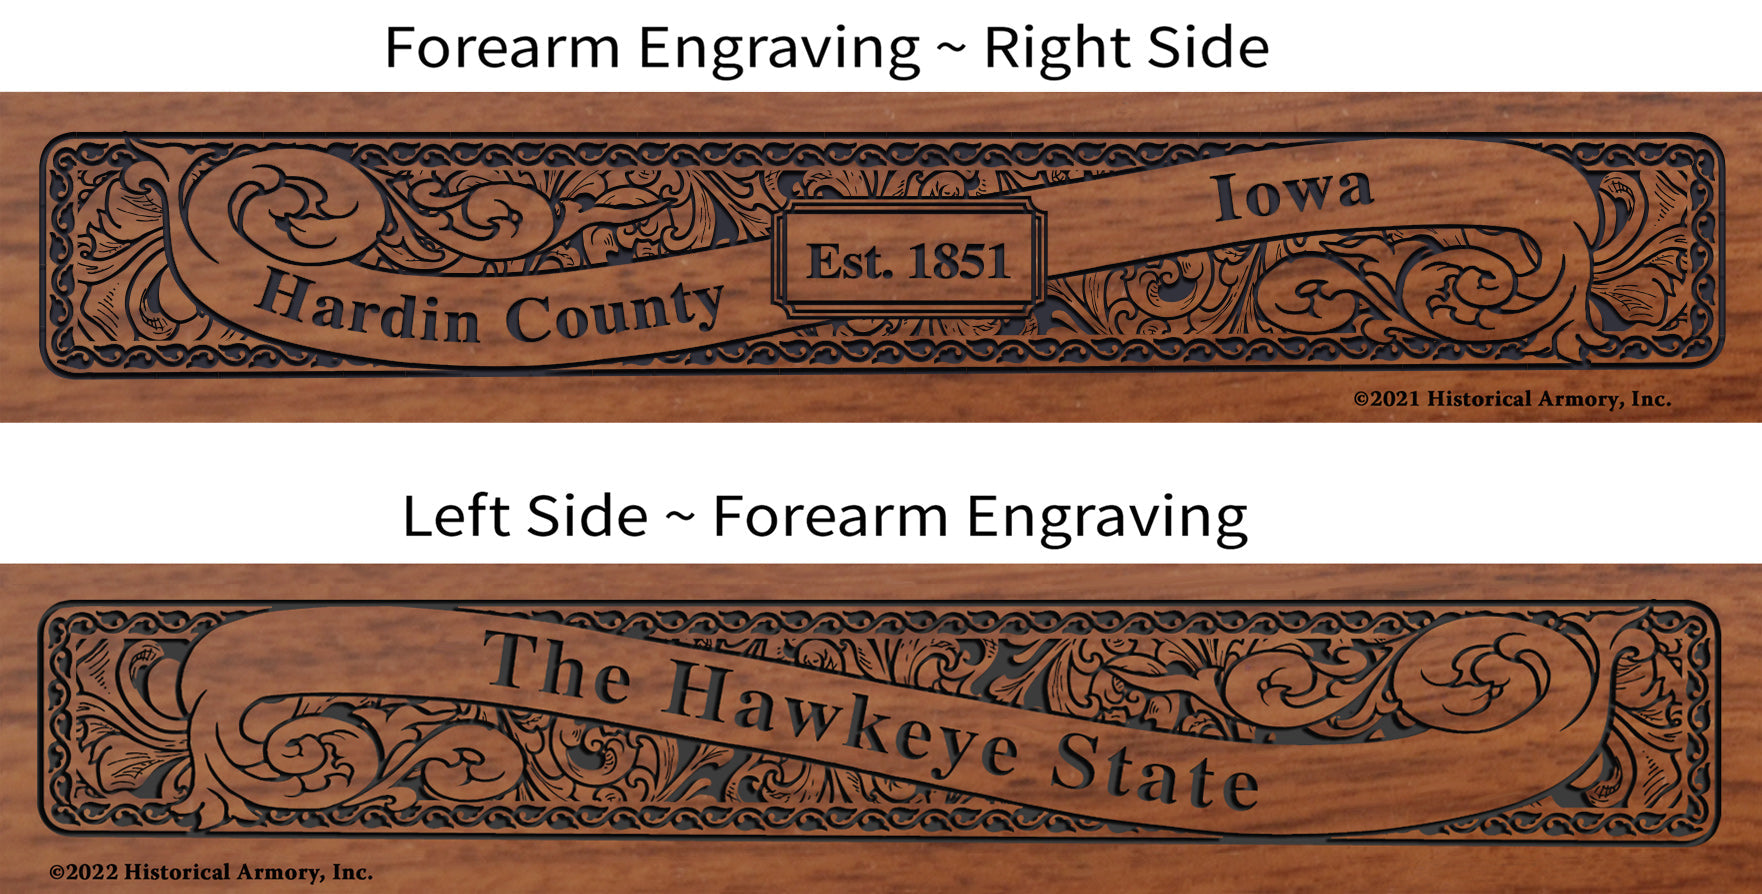 Hardin County Iowa Engraved Rifle Forearm